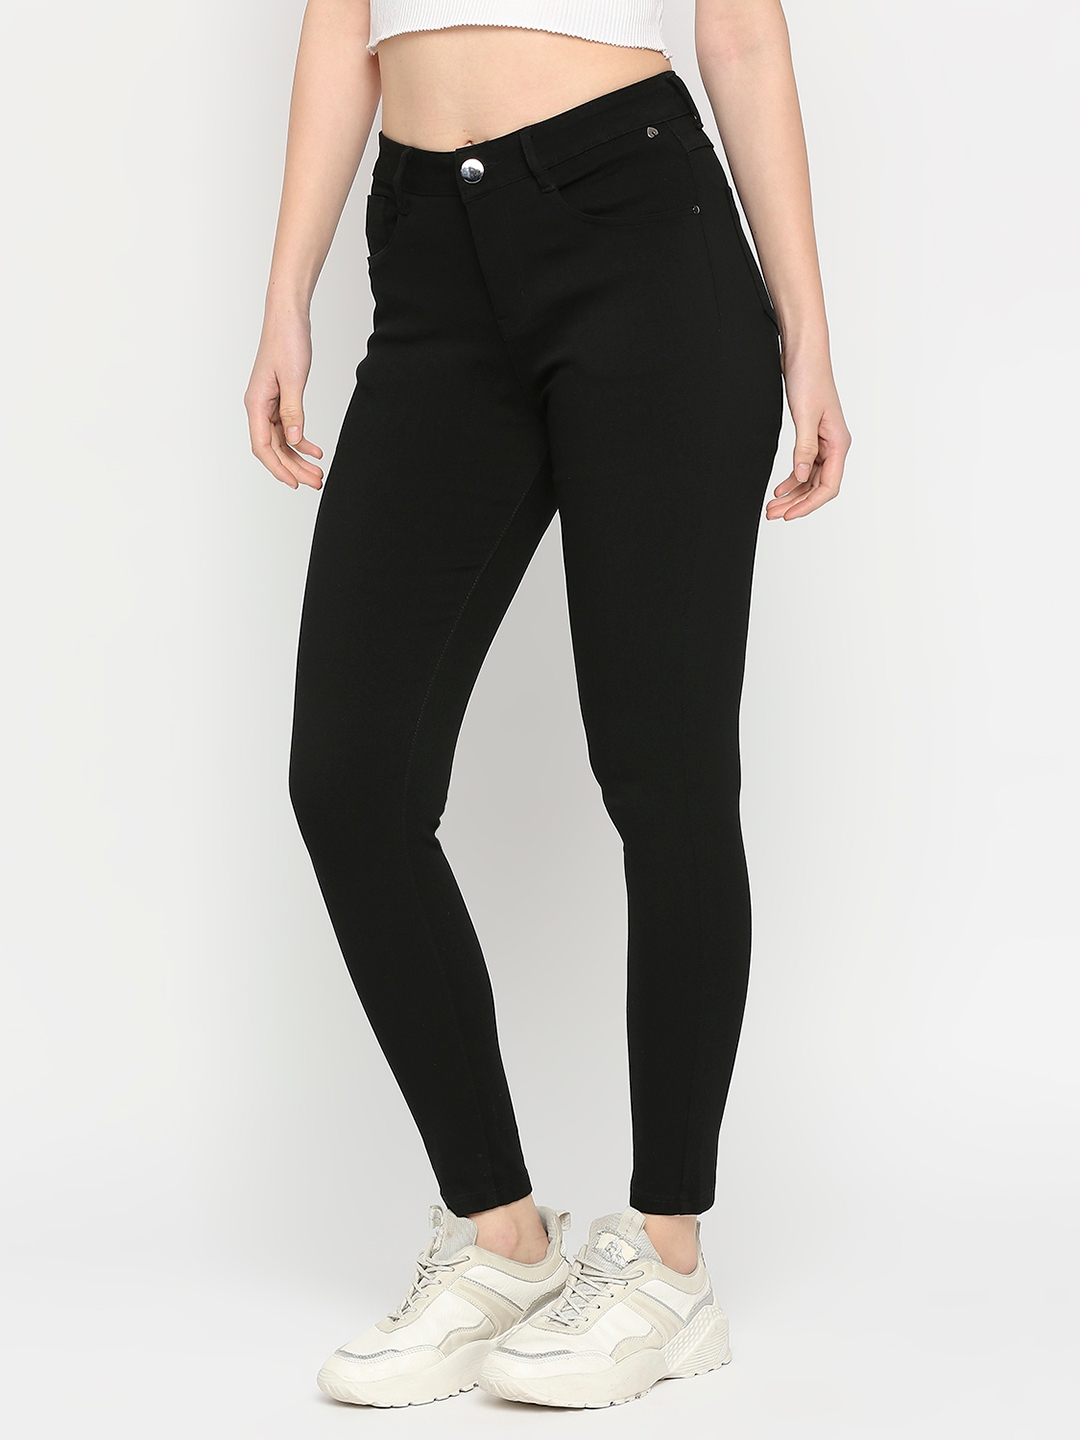 spykar | Women's Black Cotton Solid Trackpants 1